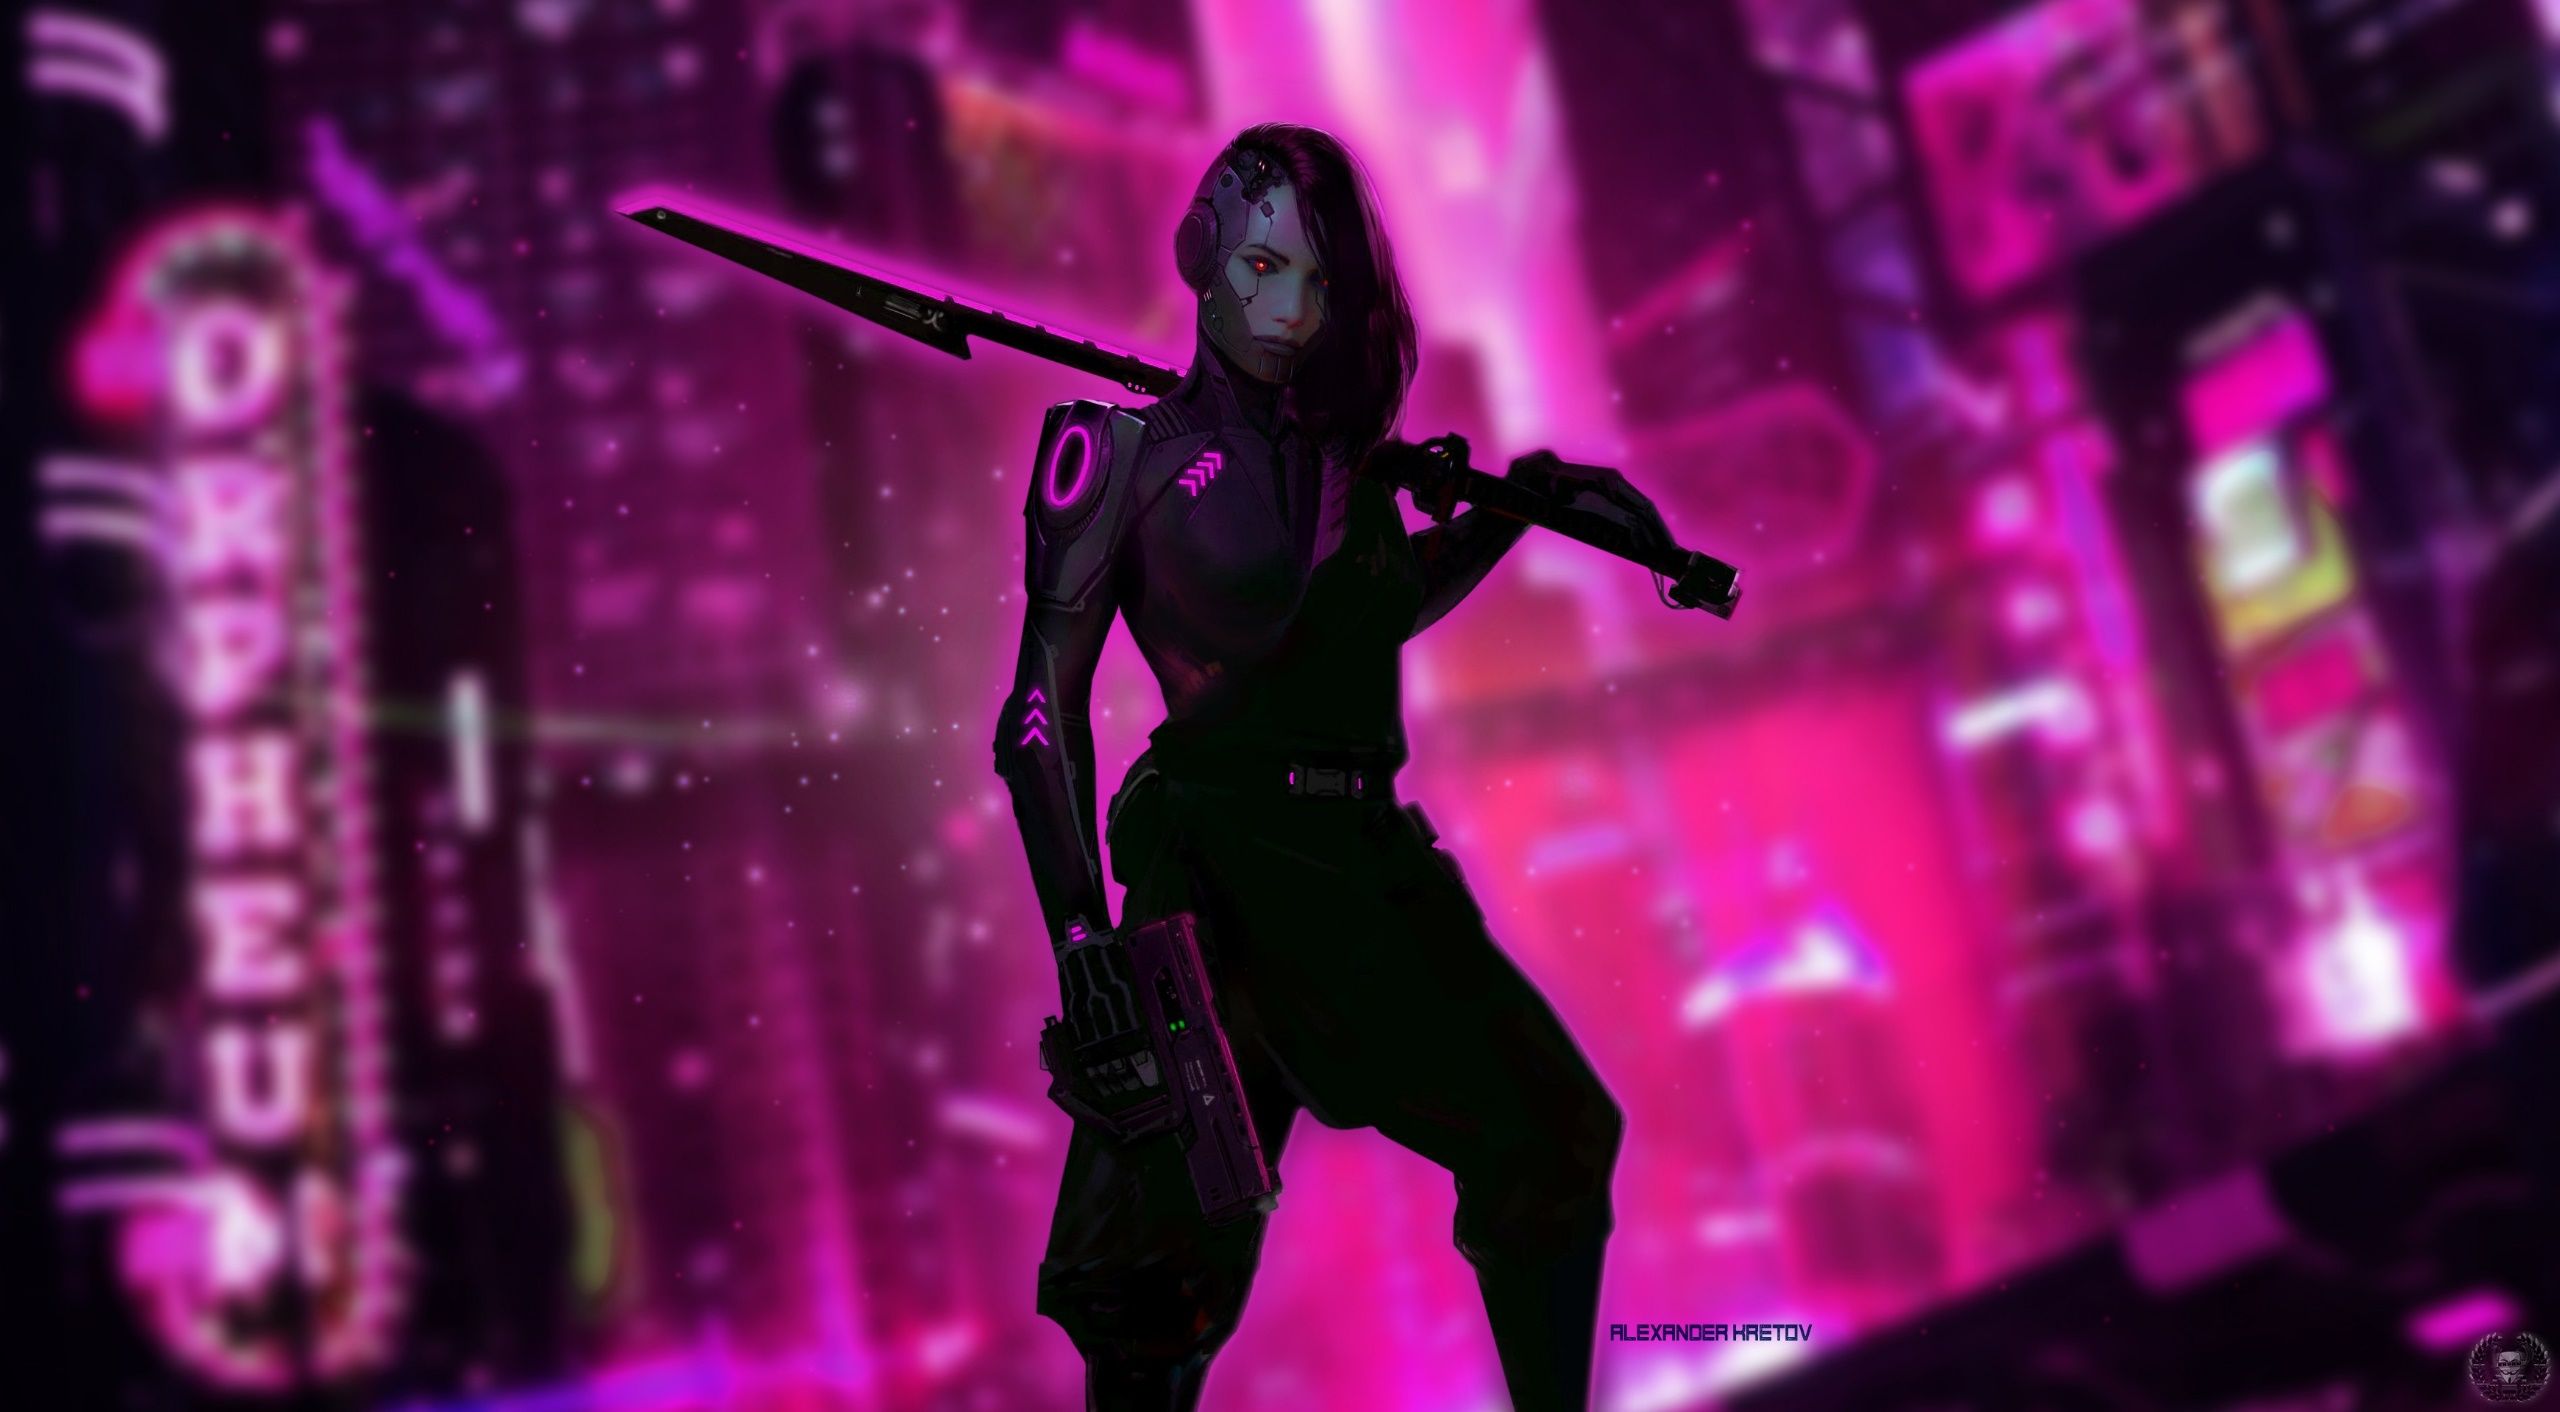 Cyberpunk Girl Digital Art, HD Artist, 4k Wallpaper, Image, Background, Photo and Picture